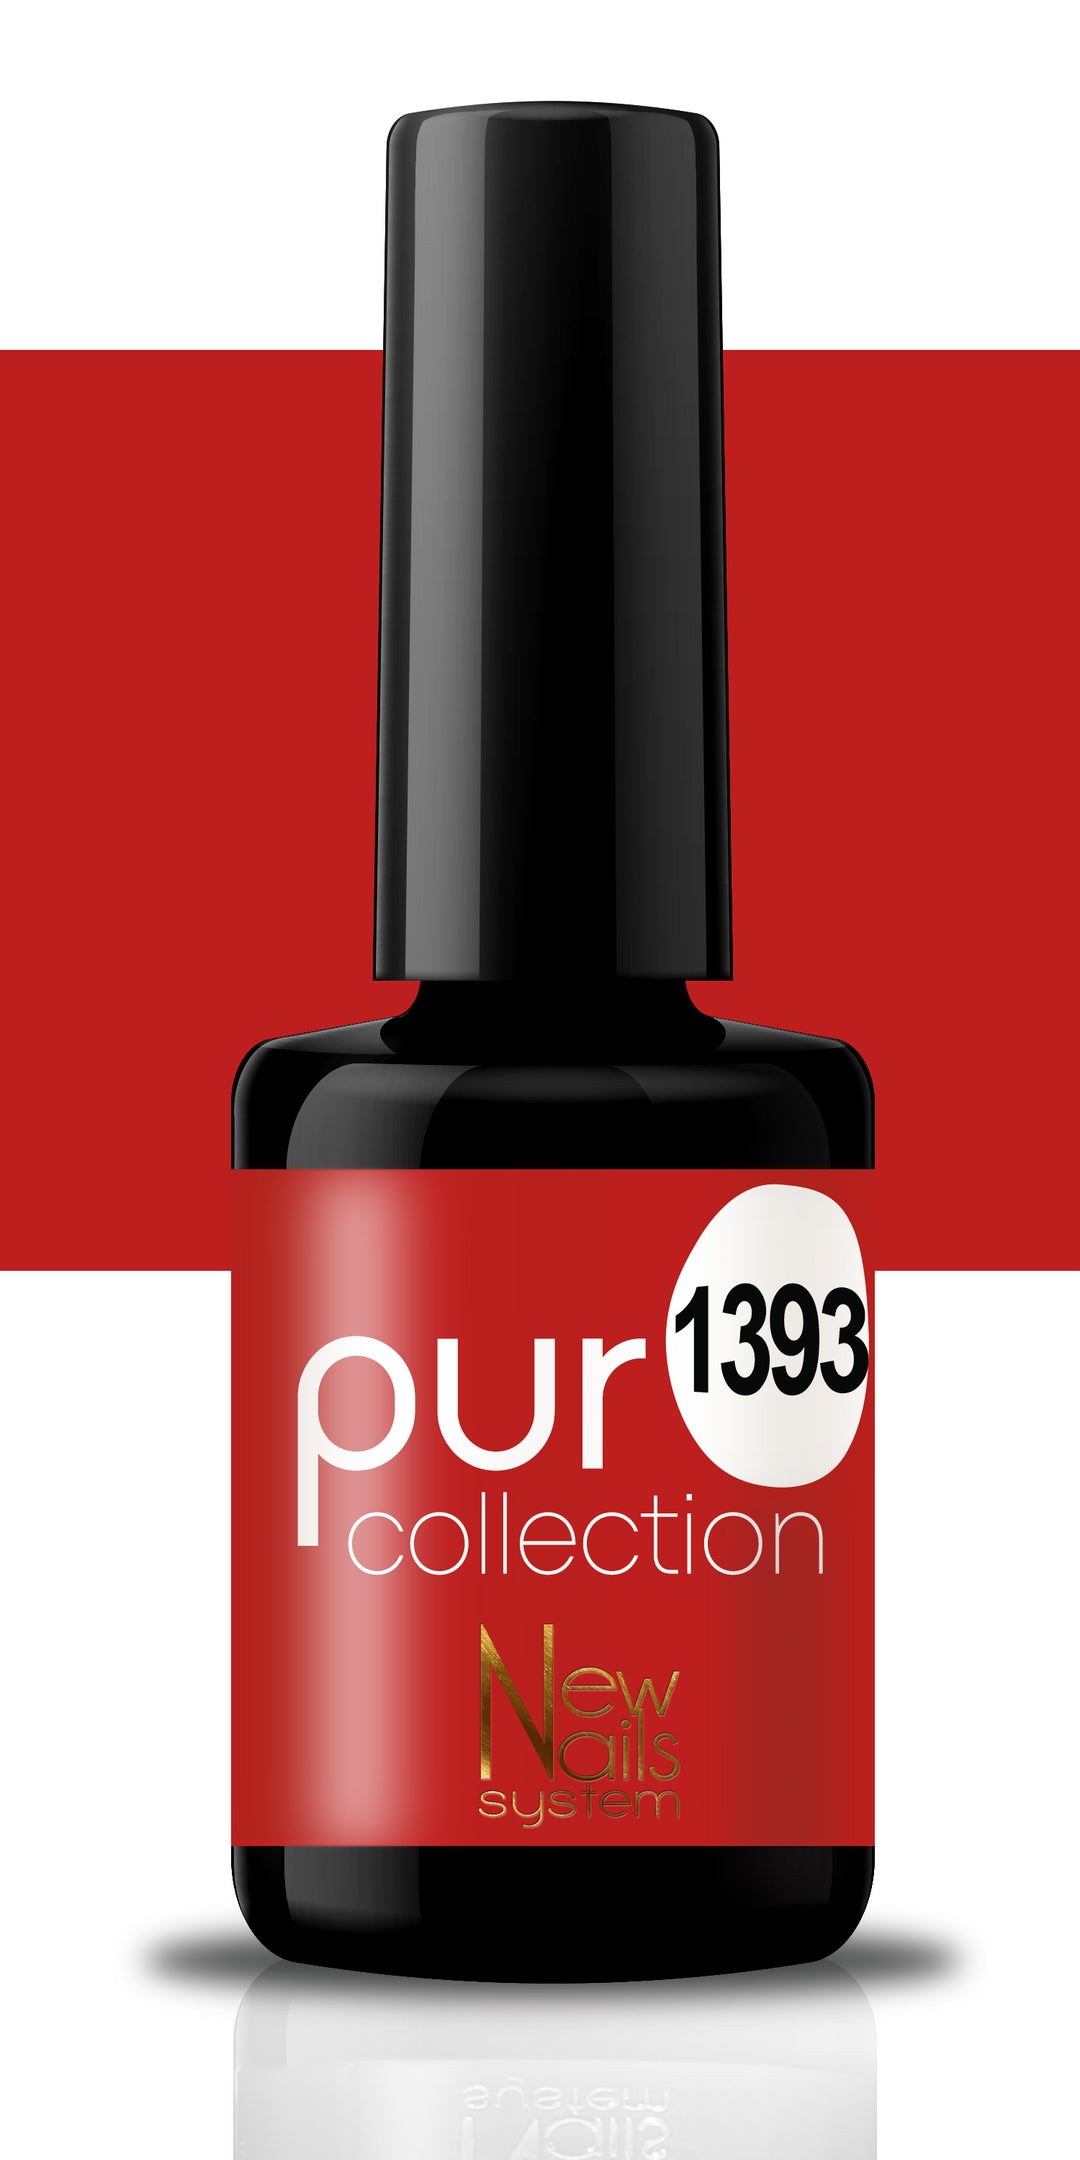 Puro collection 1393 color Rouge Passion semi-permanent 5ml